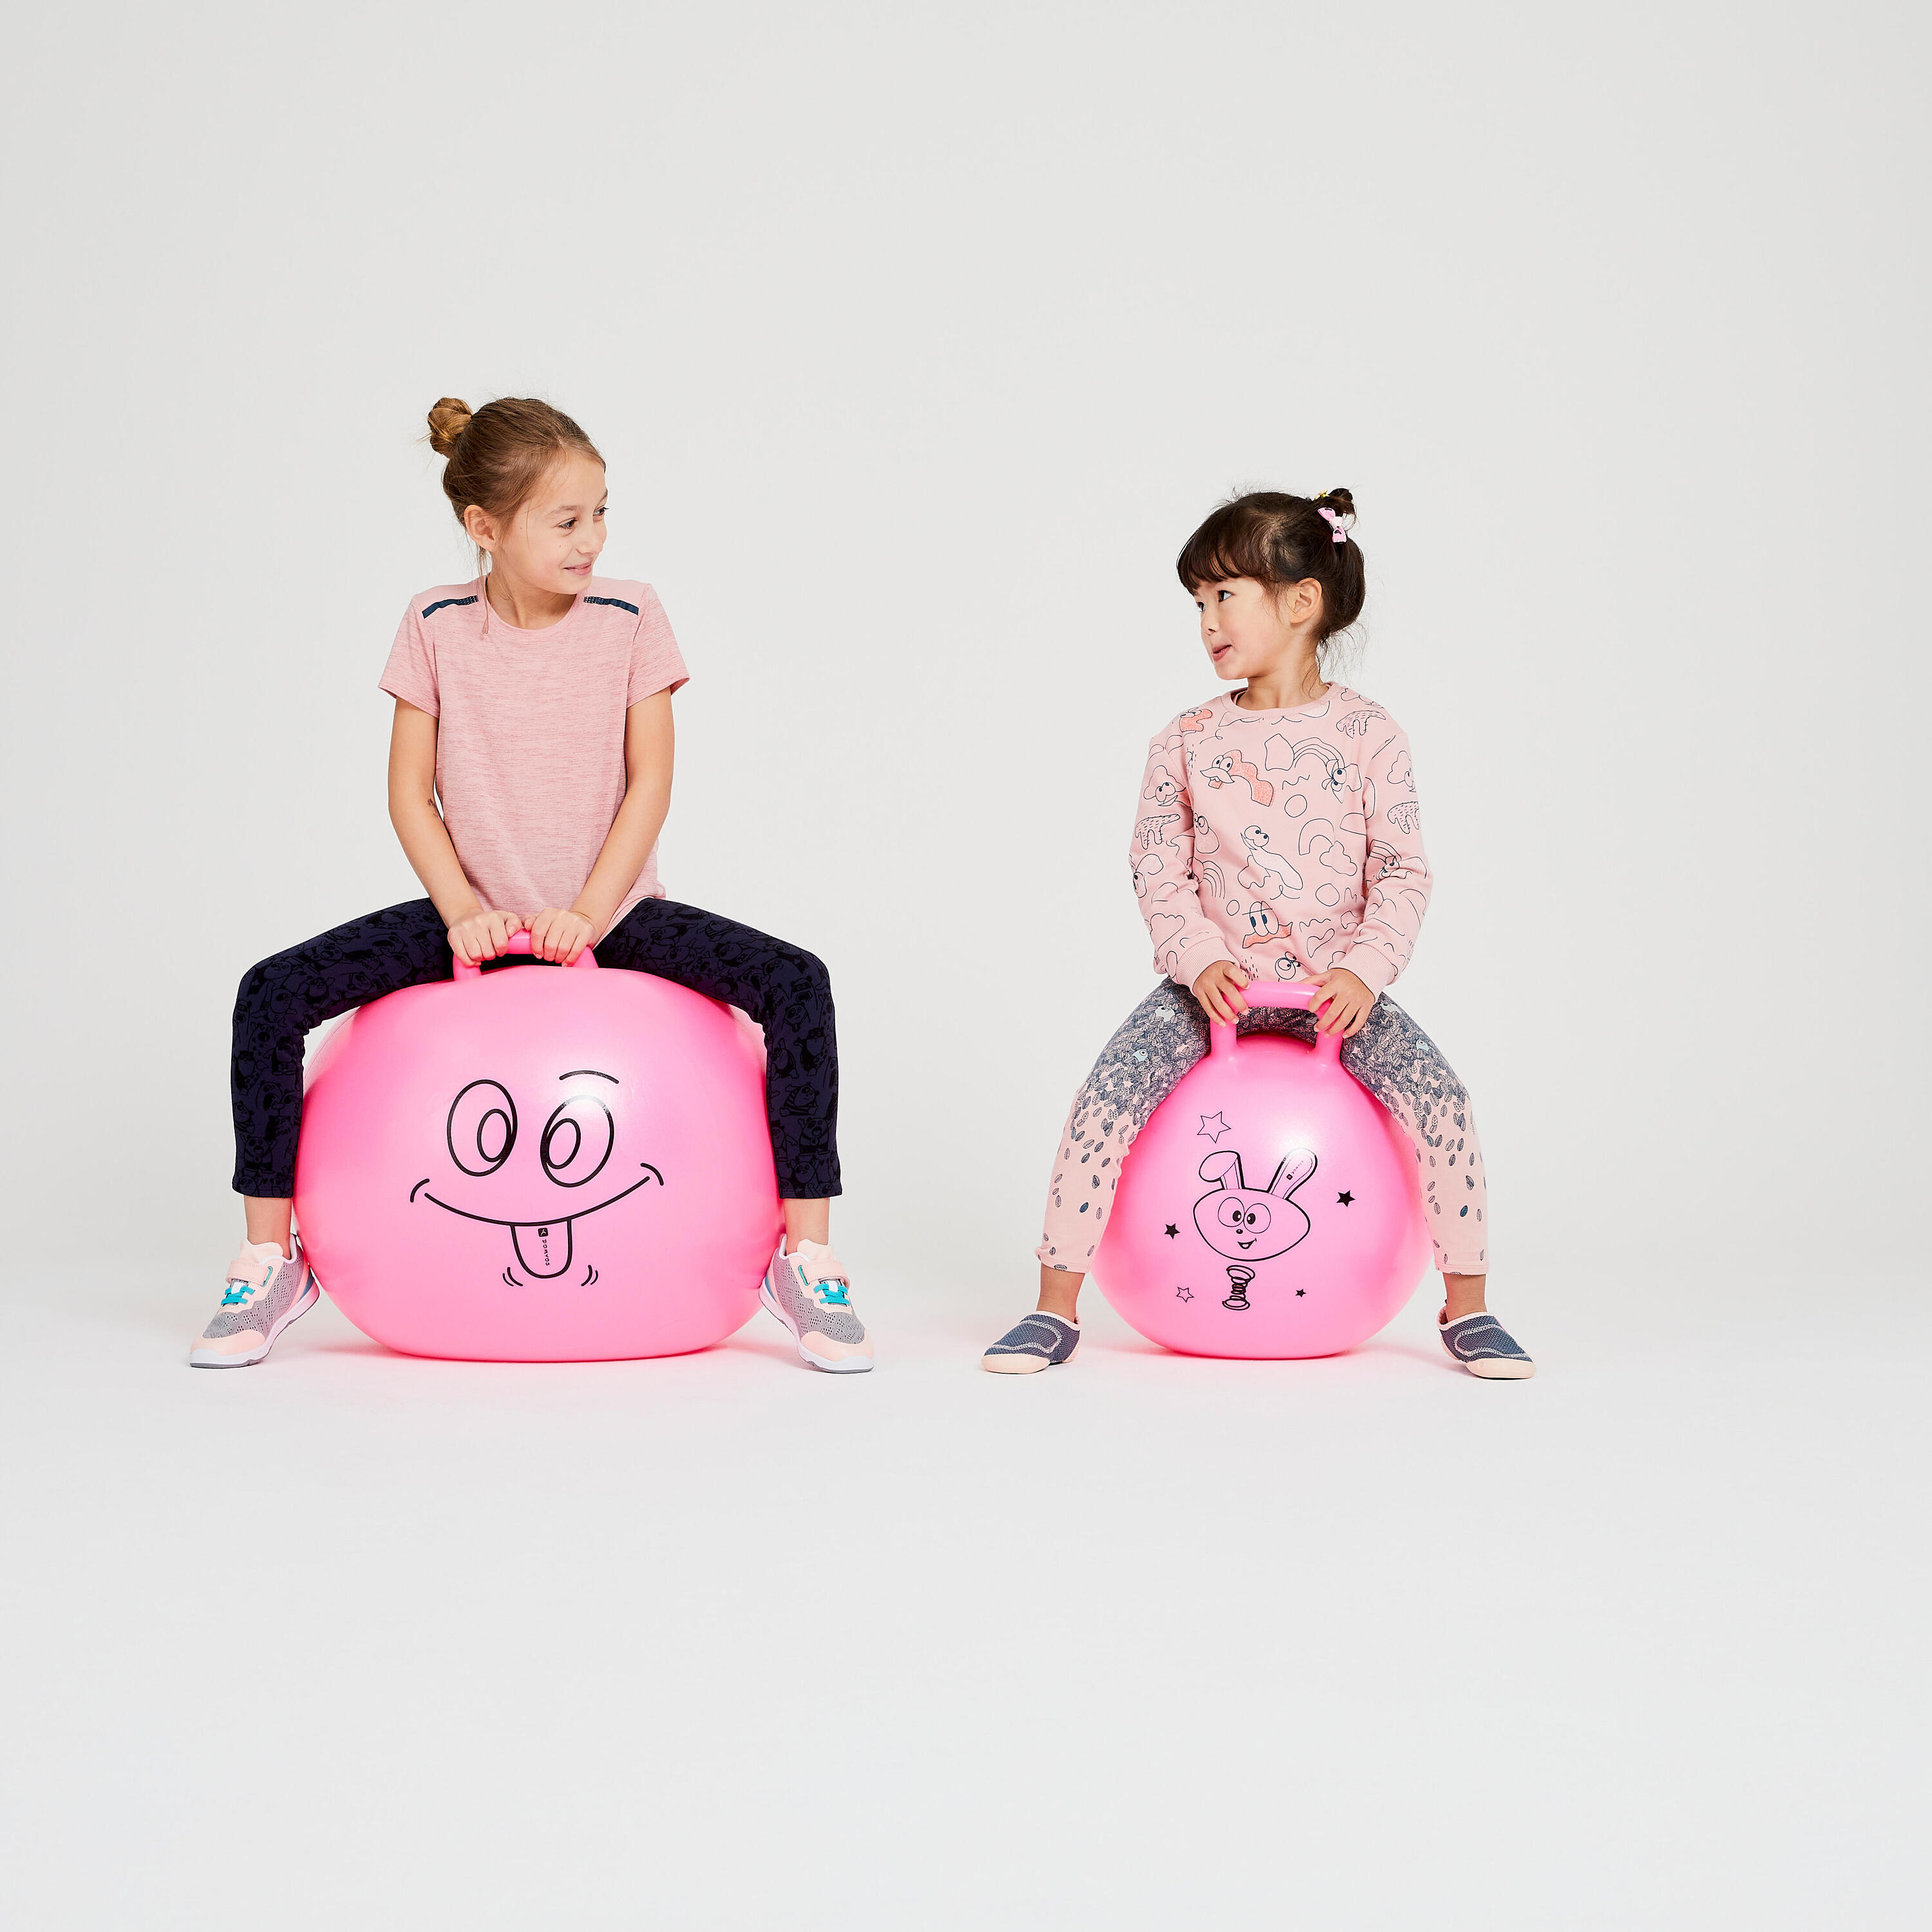 Kids' Gym Hopper Ball Resist 45 cm - Pink 7/7